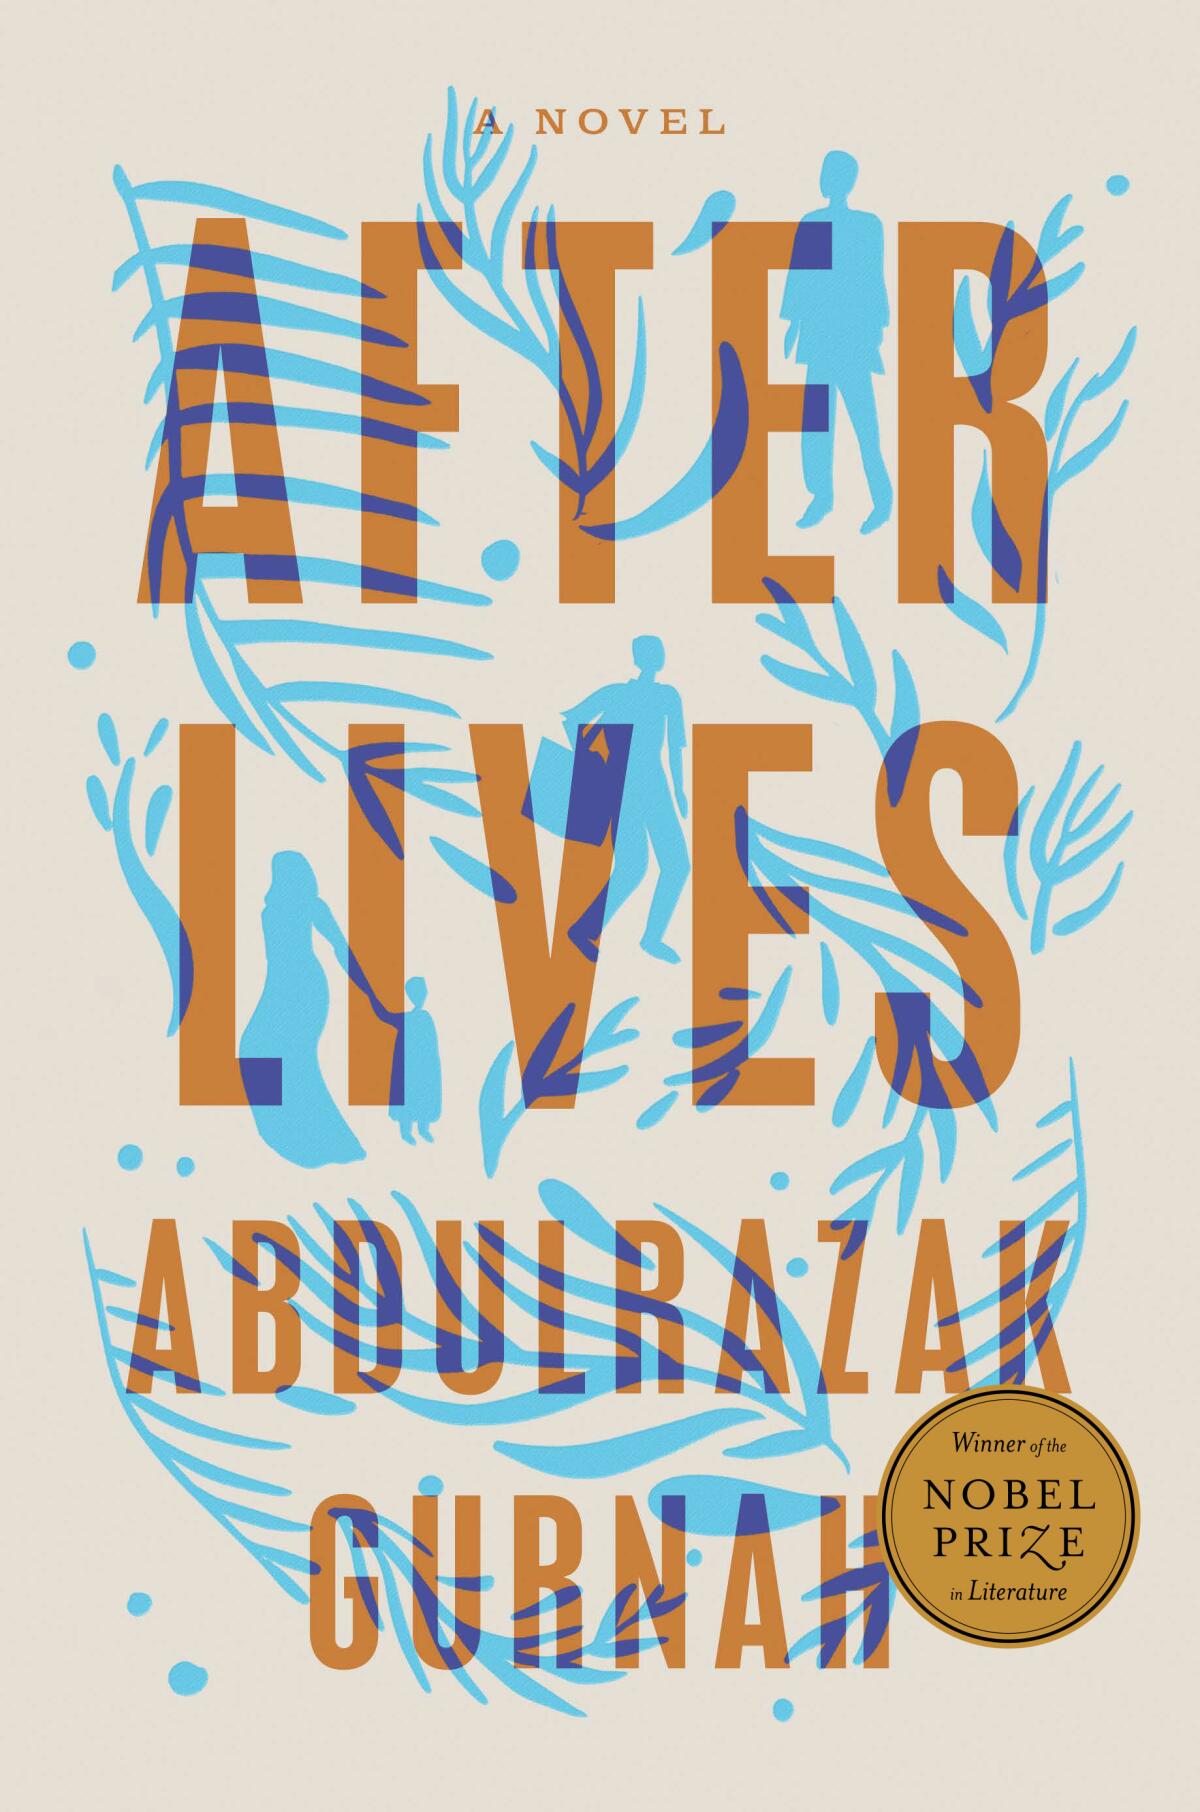 "Afterlives: A Novel" by Abdulrazak Gurnah